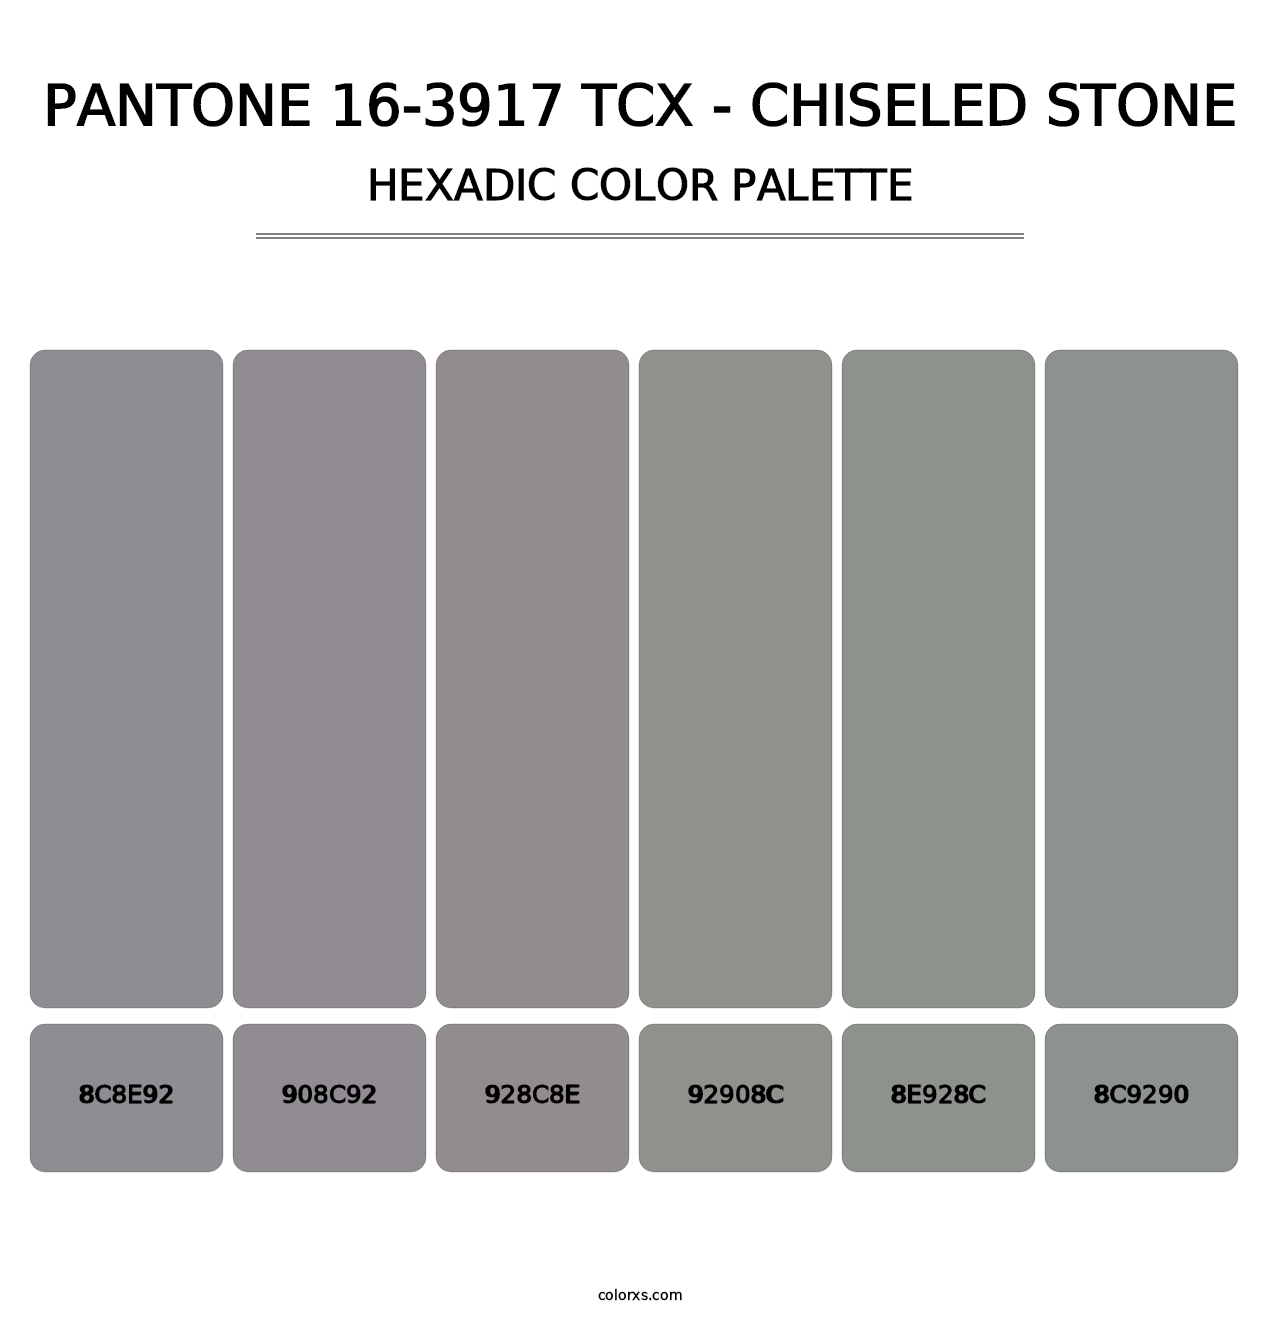 PANTONE 16-3917 TCX - Chiseled Stone - Hexadic Color Palette